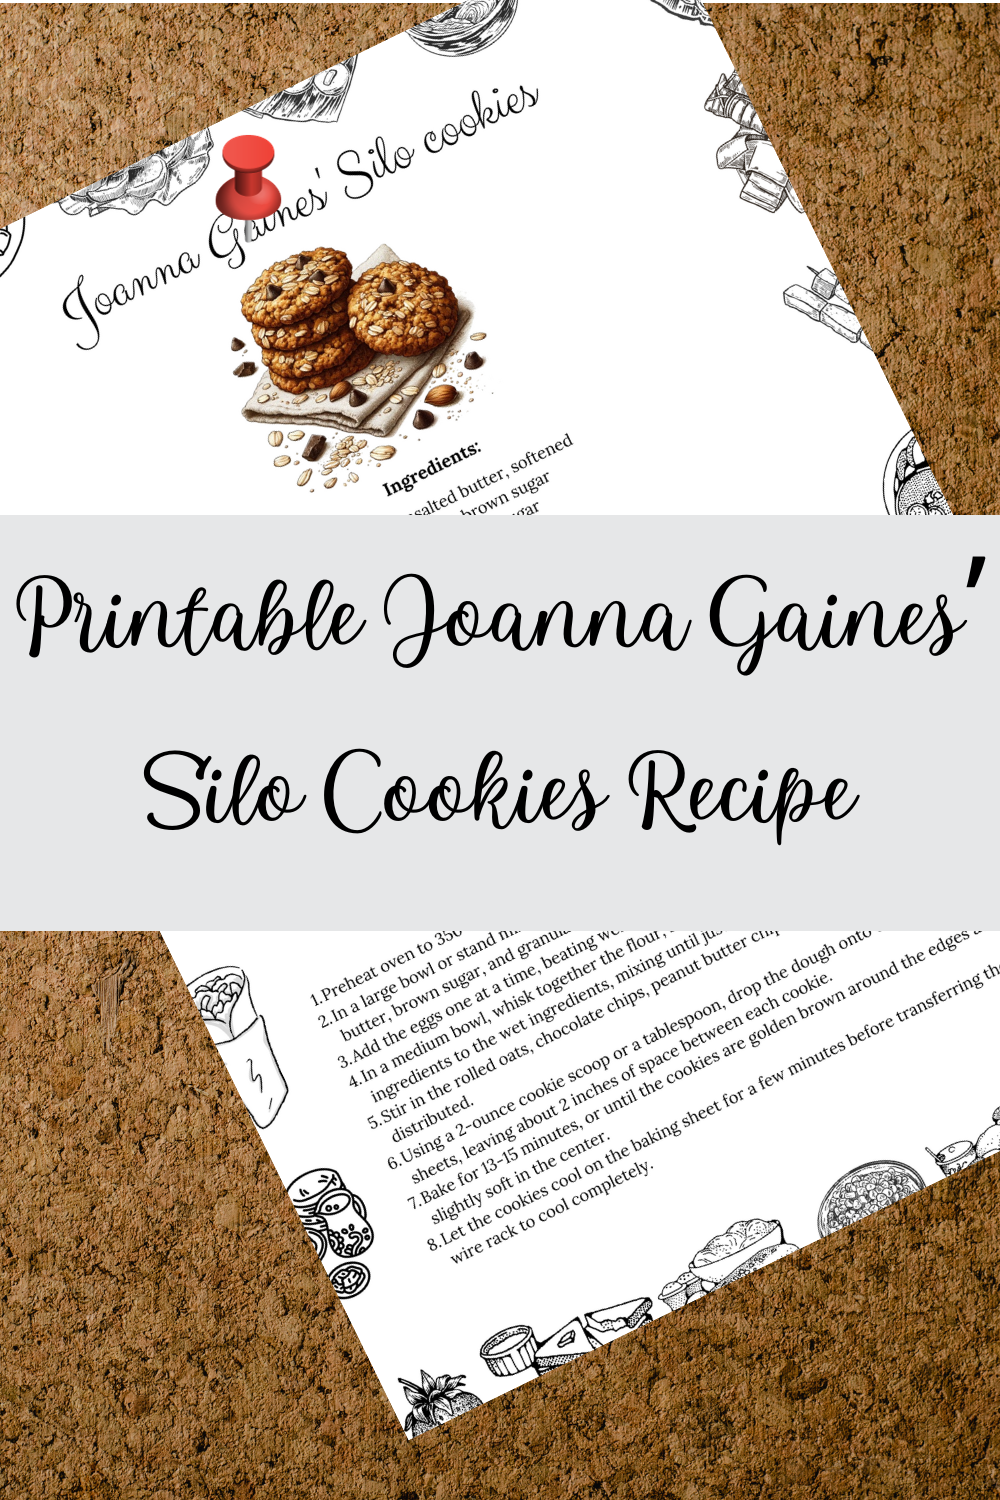 Printable Joanna Gaines' Silo Cookies Recipe